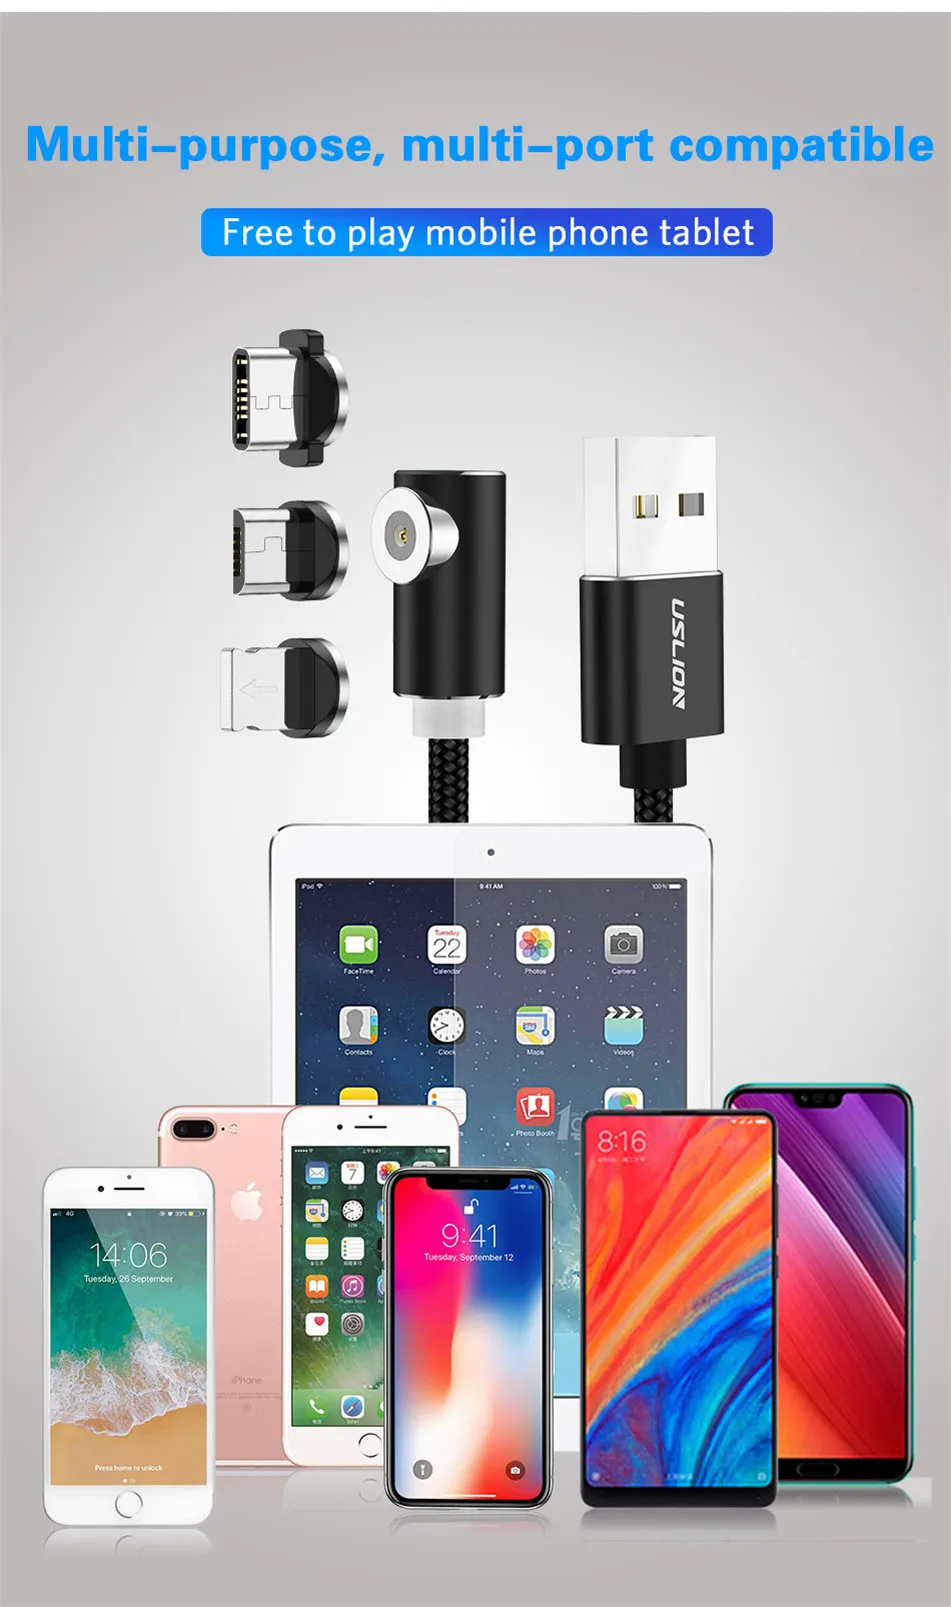 USLION 2 м Быстрый Магнитный кабель type C Micro usb для зарядки iPhone X, XR, 8, 7, samsung, S10, huawei, магнитный кабель для зарядки телефона